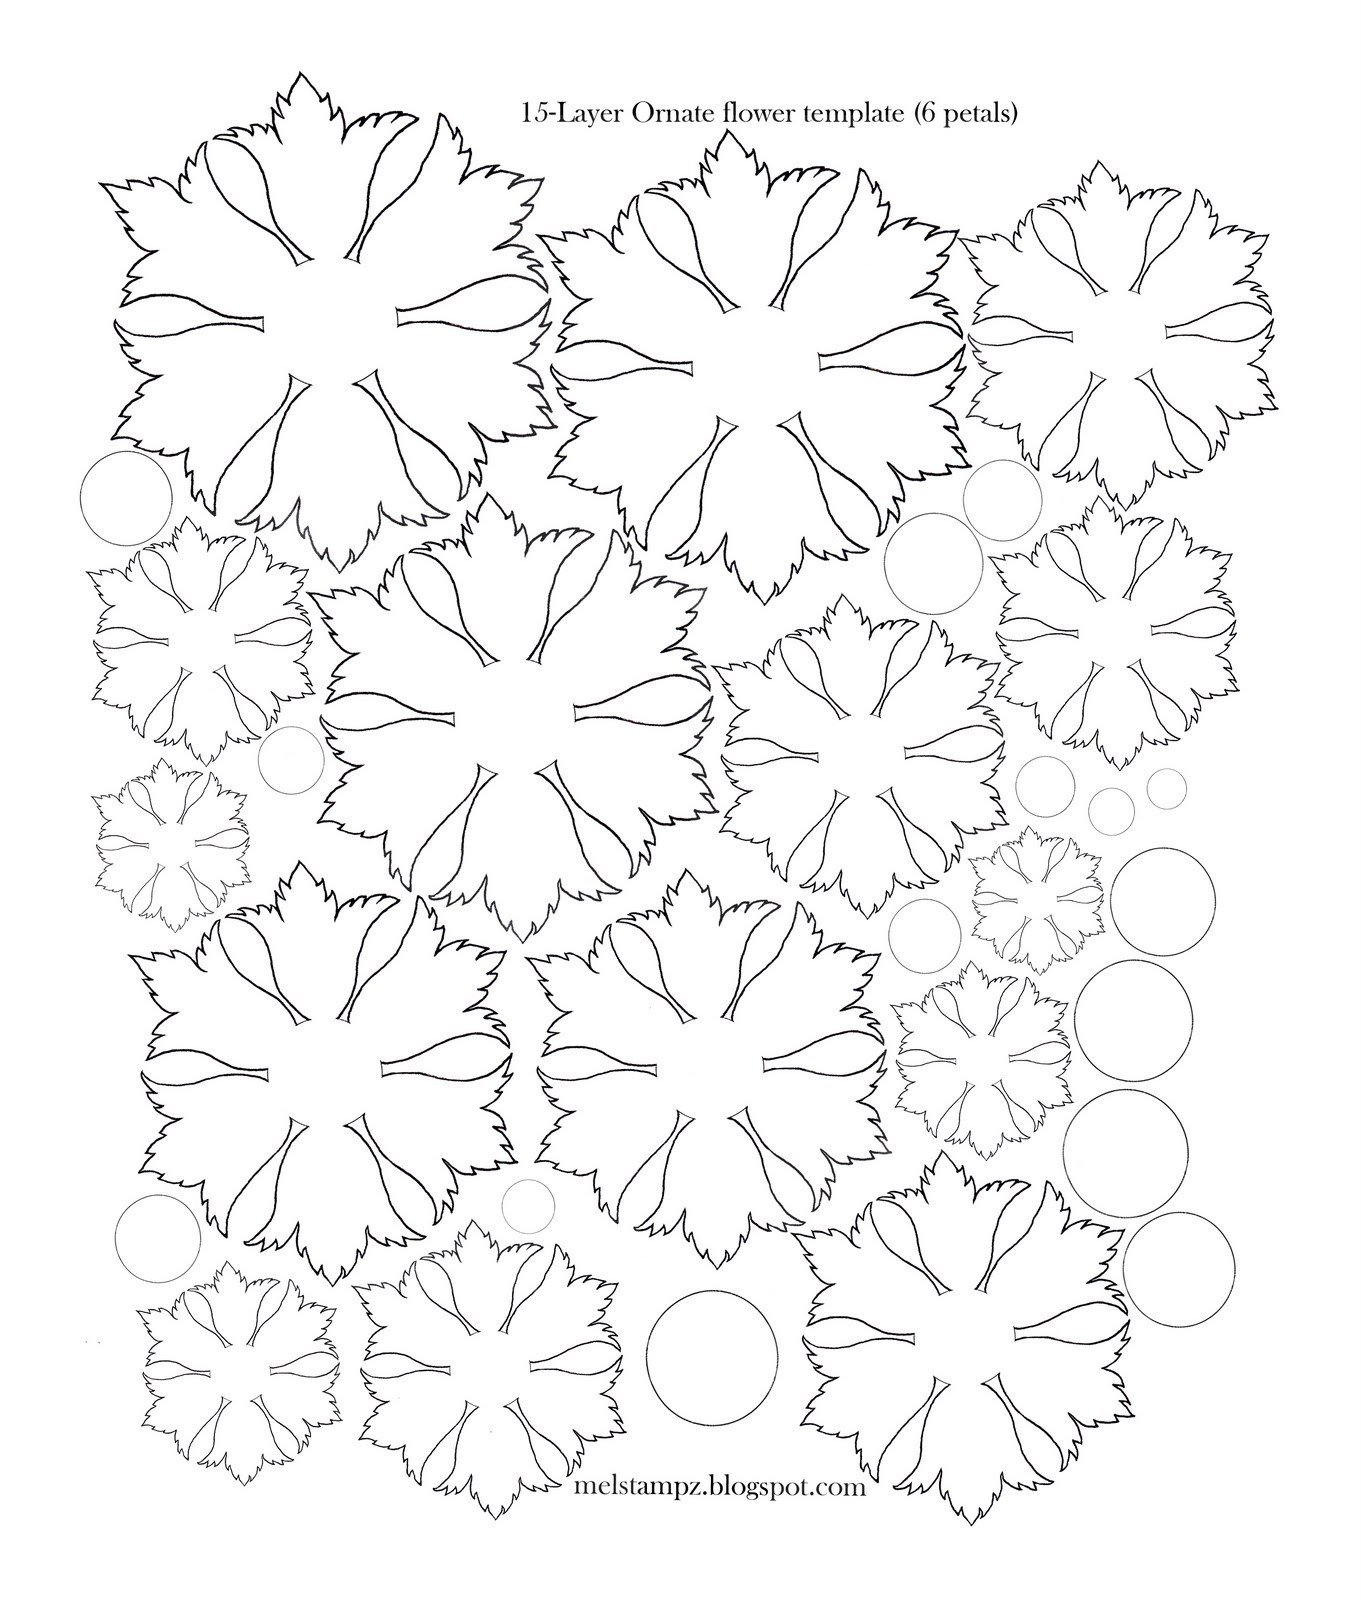 Mel Stampz 6 petal Ornate Flower template